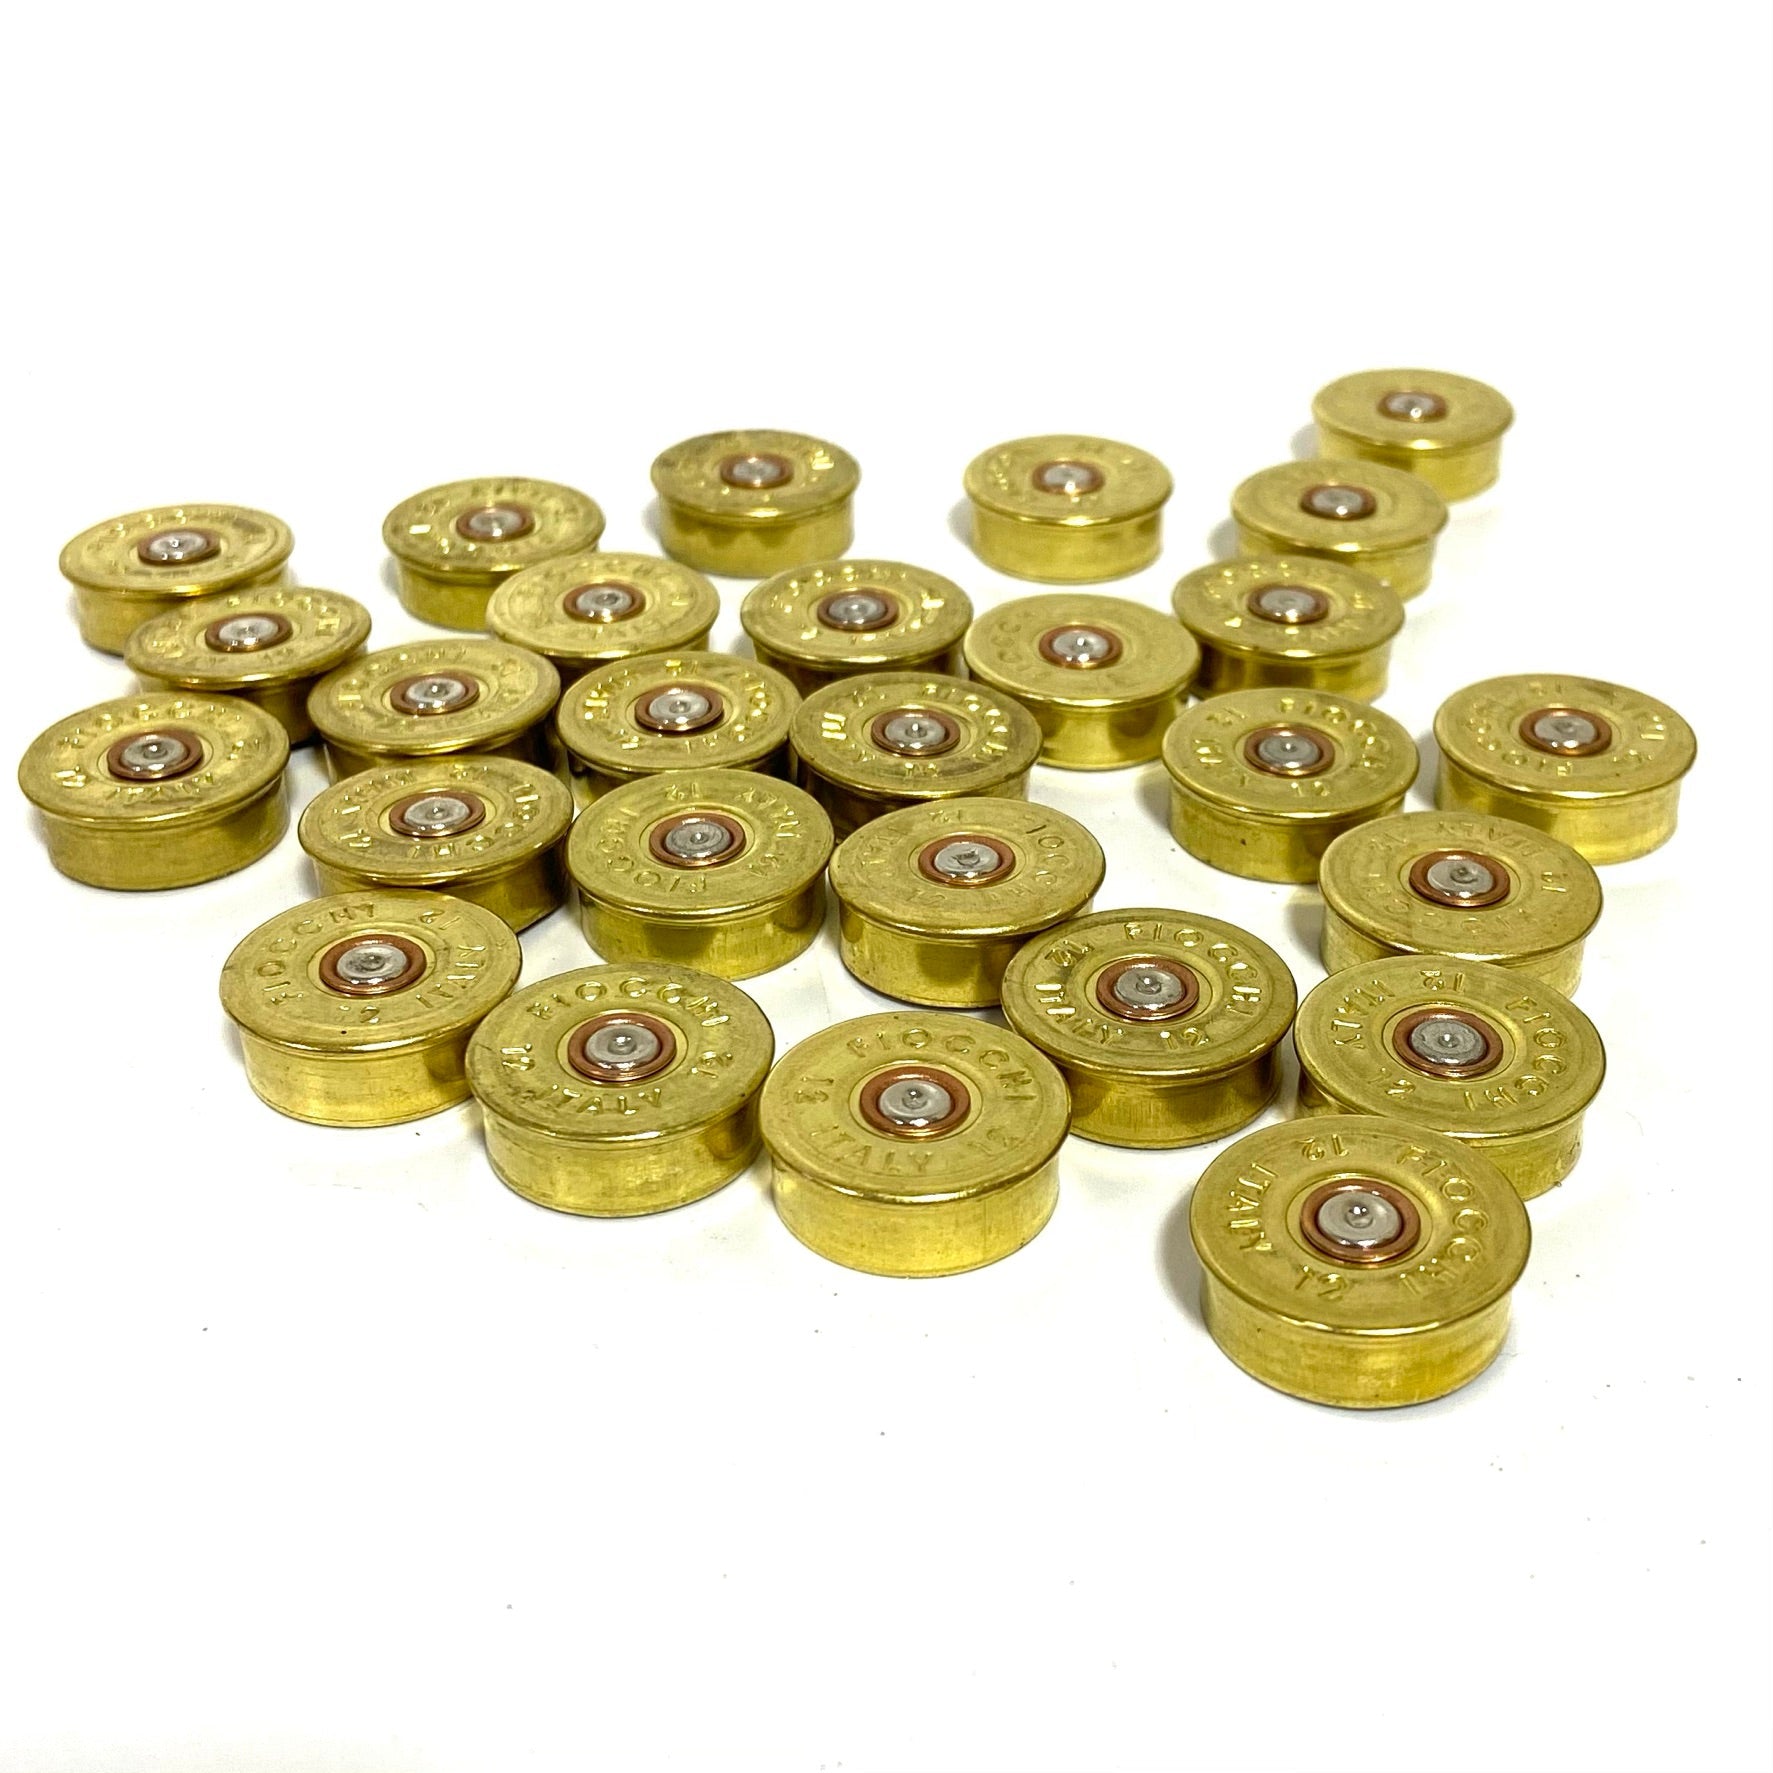 Brass Shotgun Cartridge Cap lapel Pin